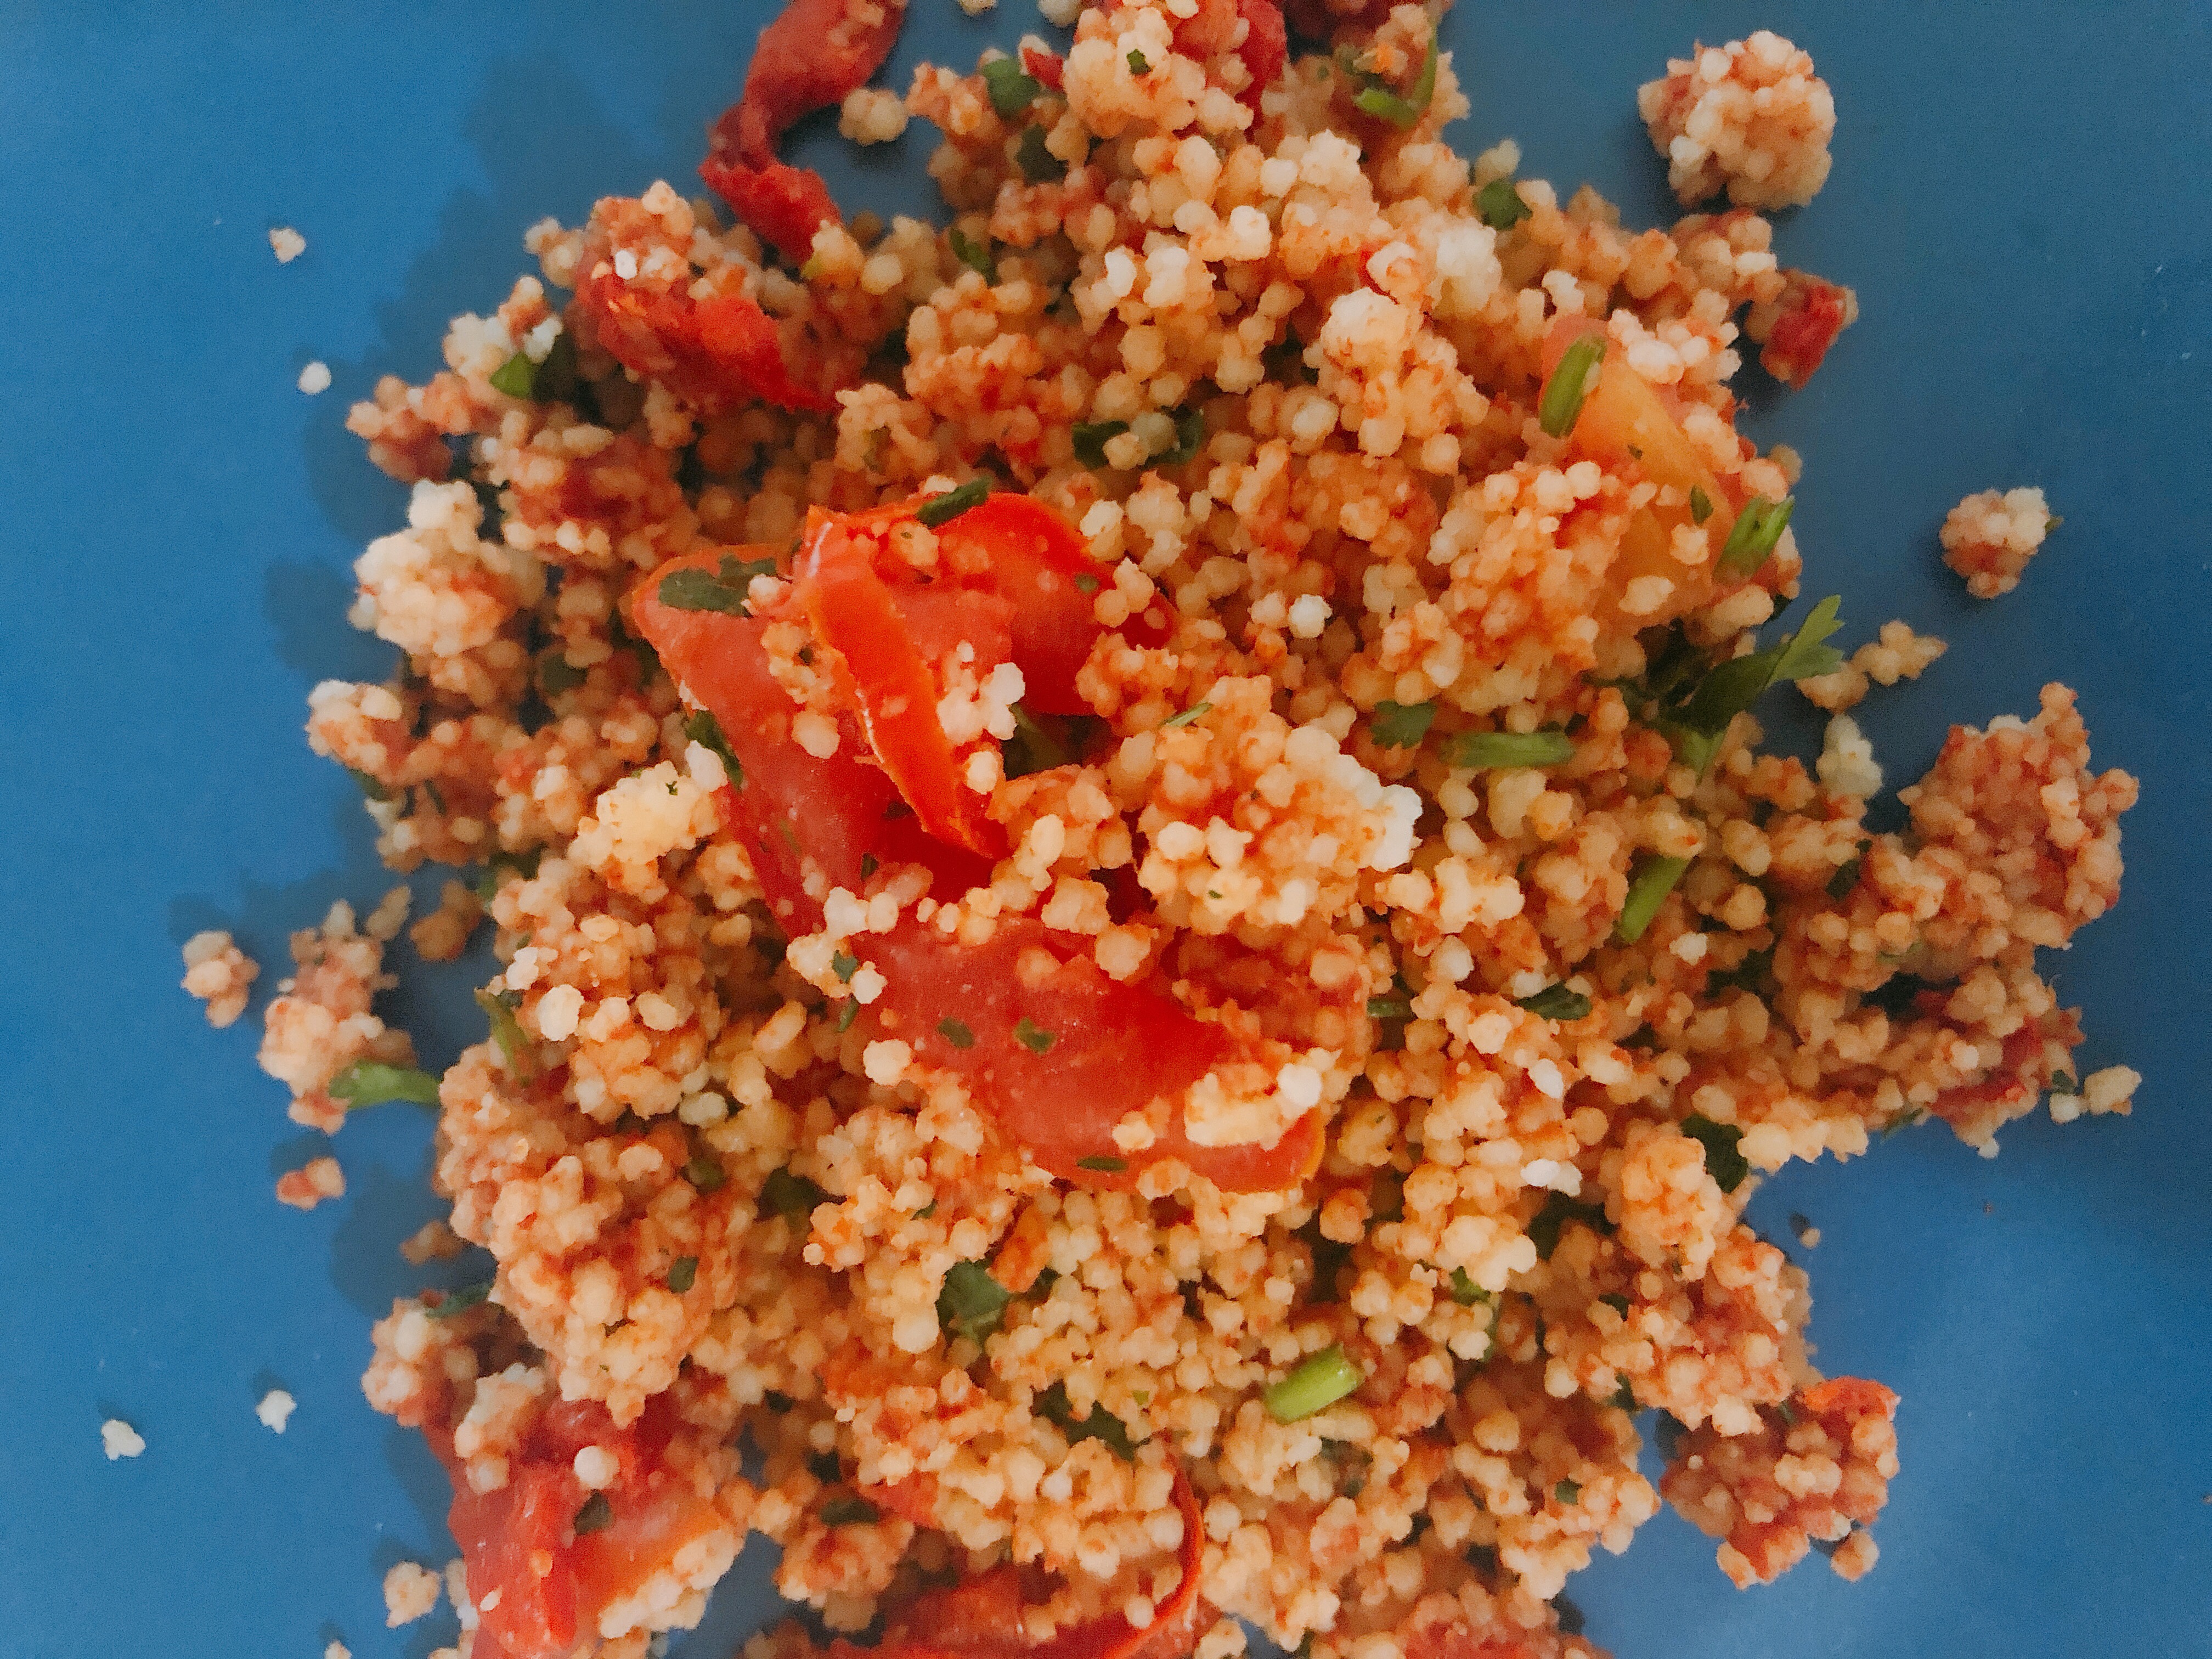 Turkish Kisir (Tomato Couscous Salad Recipe)